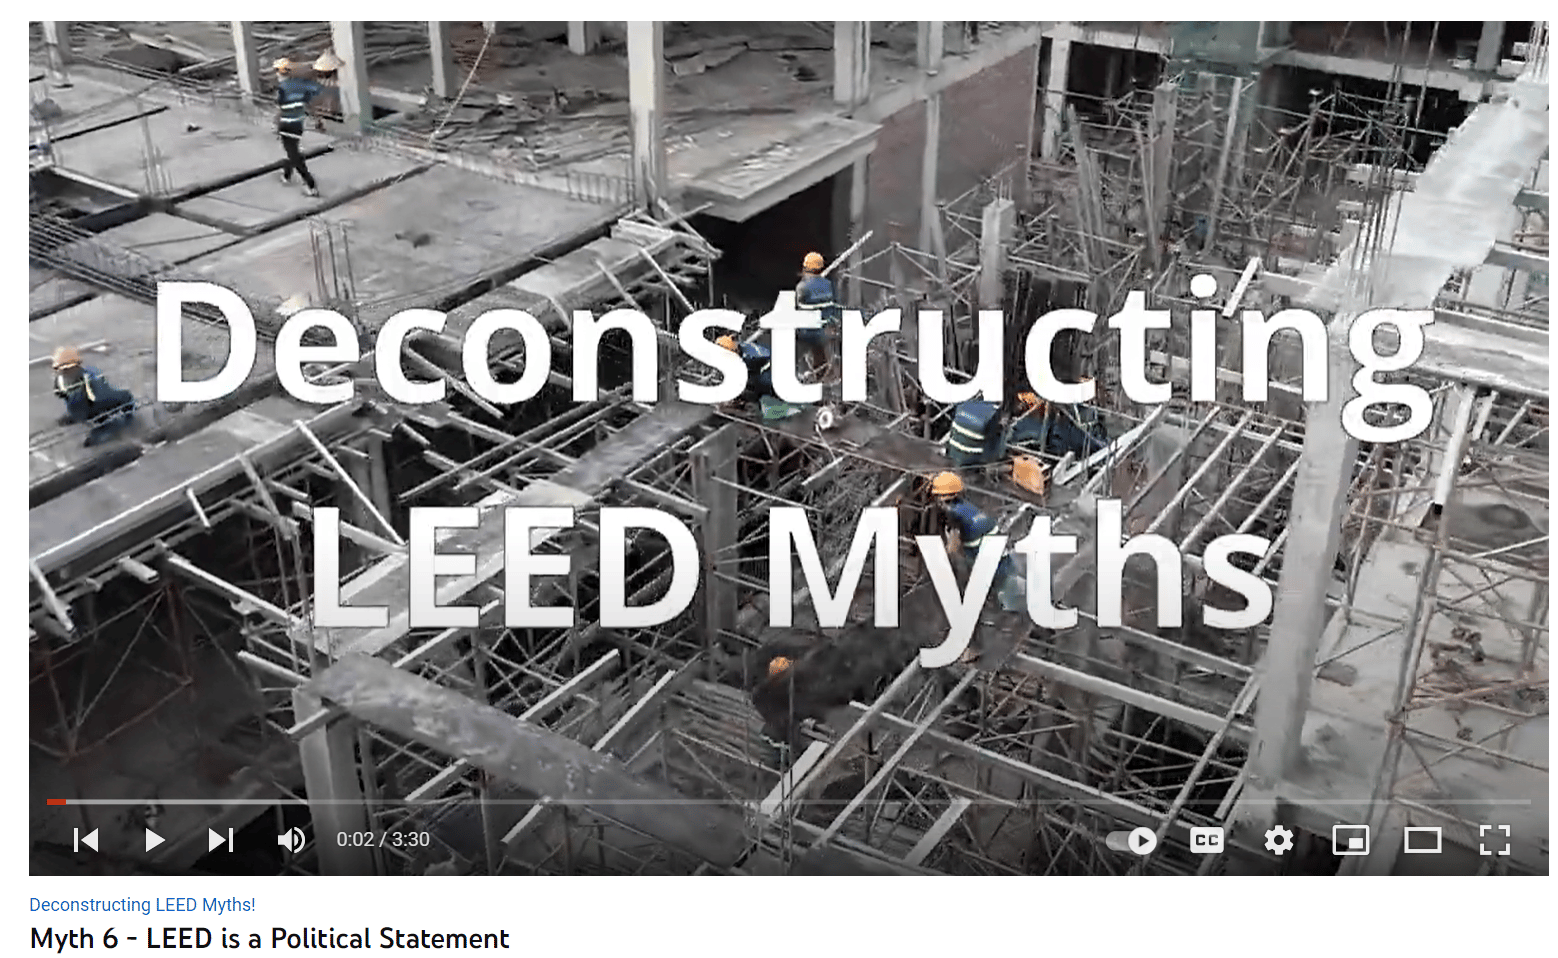 Deconstructing LEED Myths